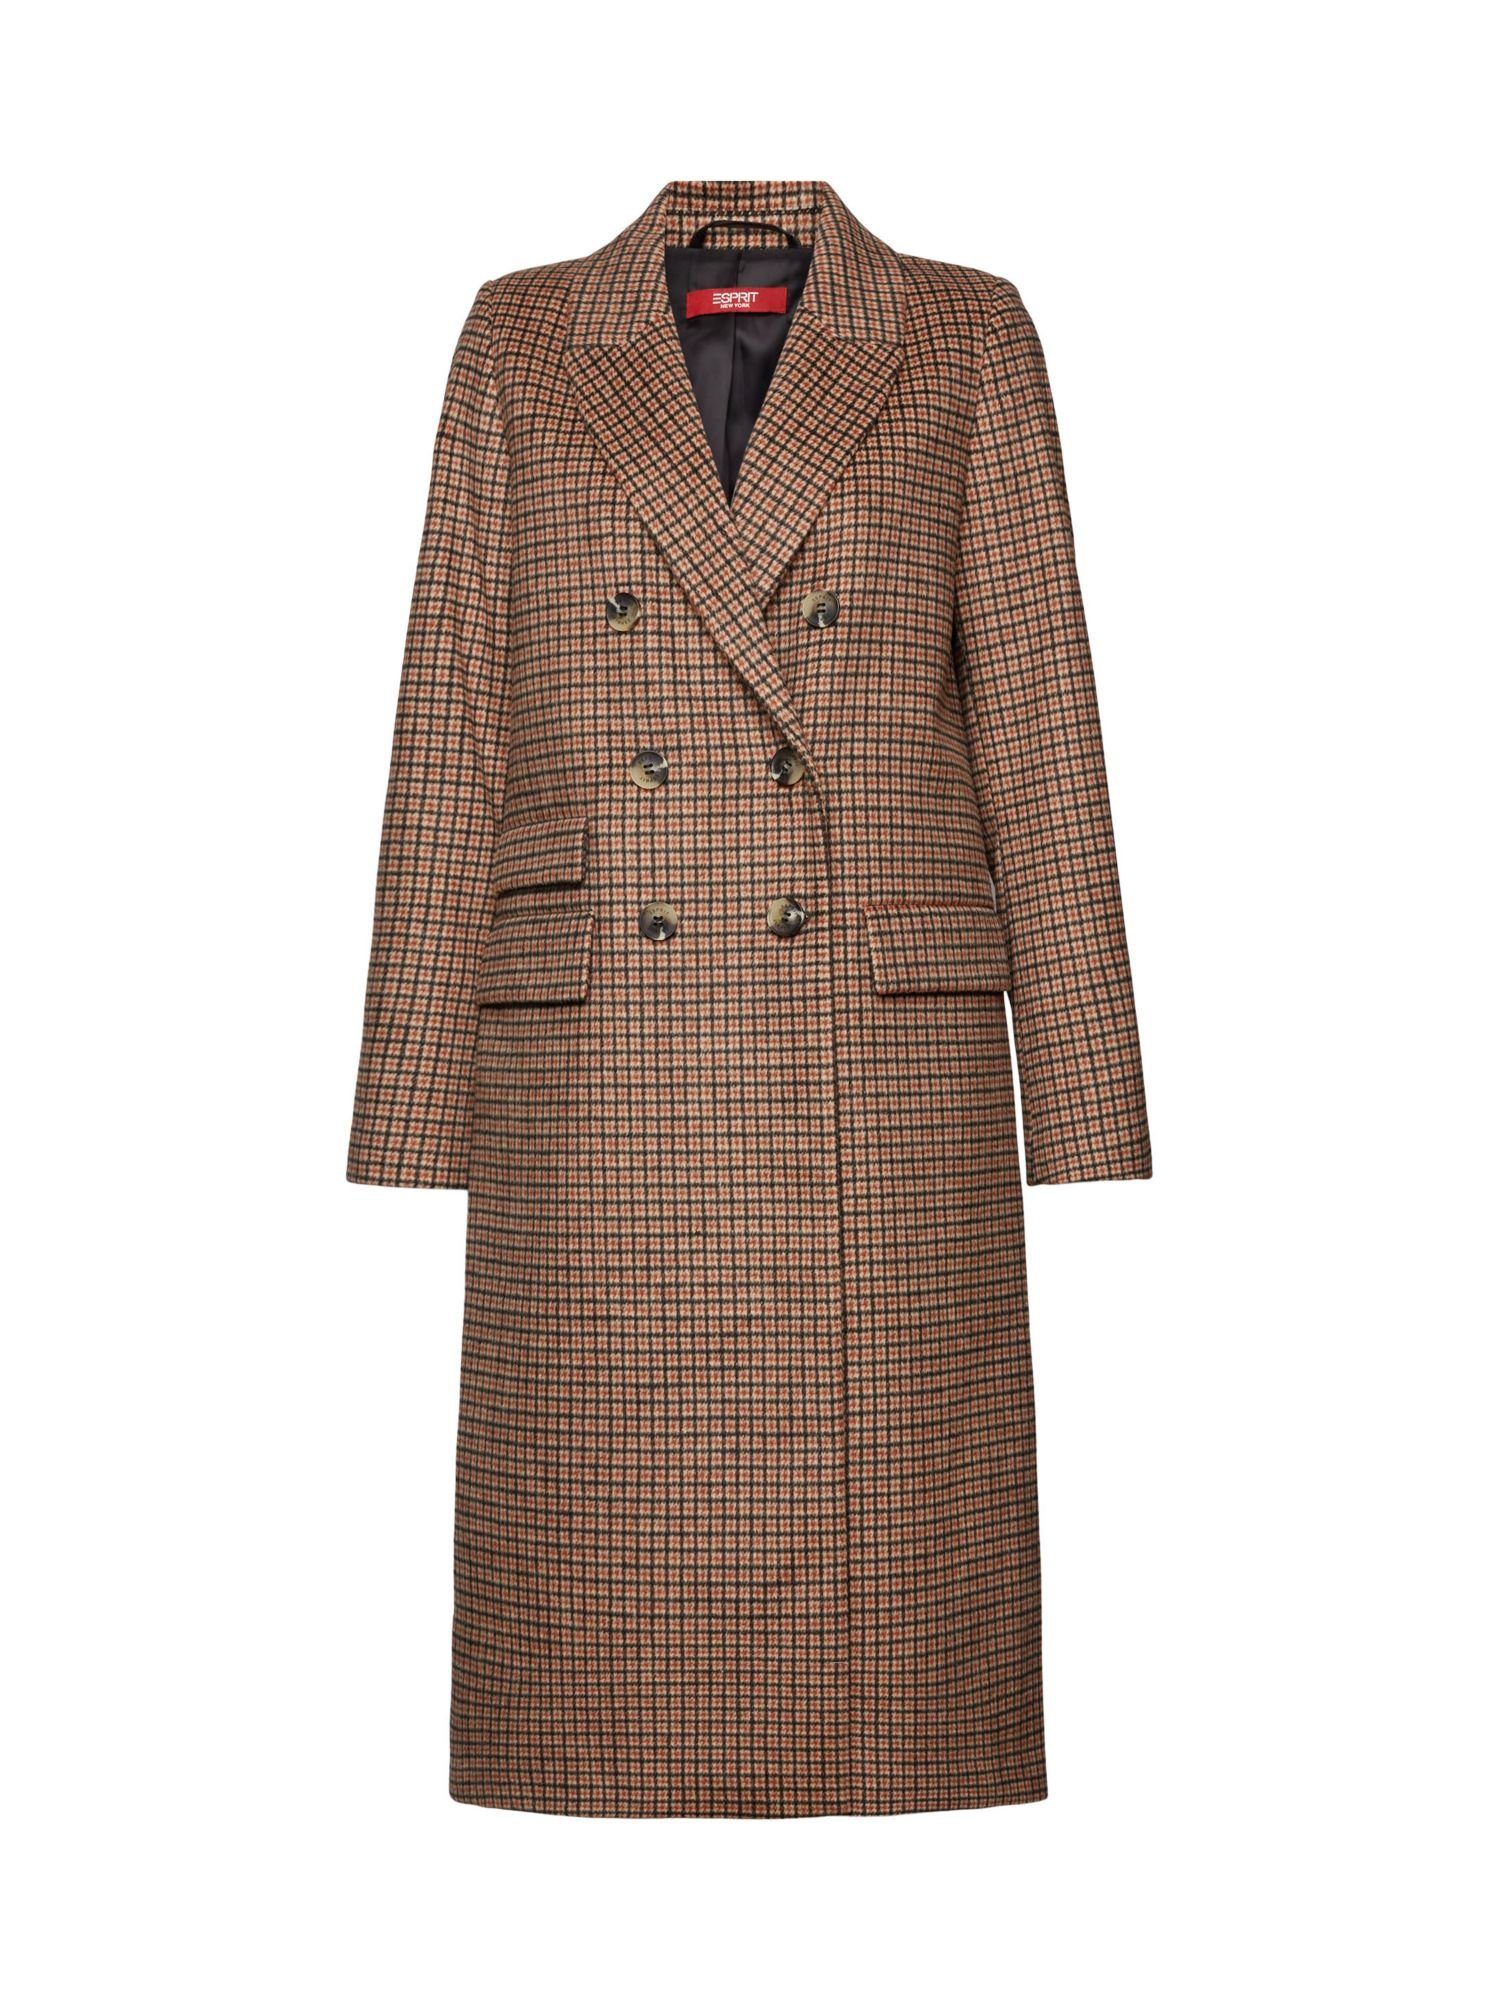 Esprit Collection Wollmantel Karierter Mantel aus Wollmix